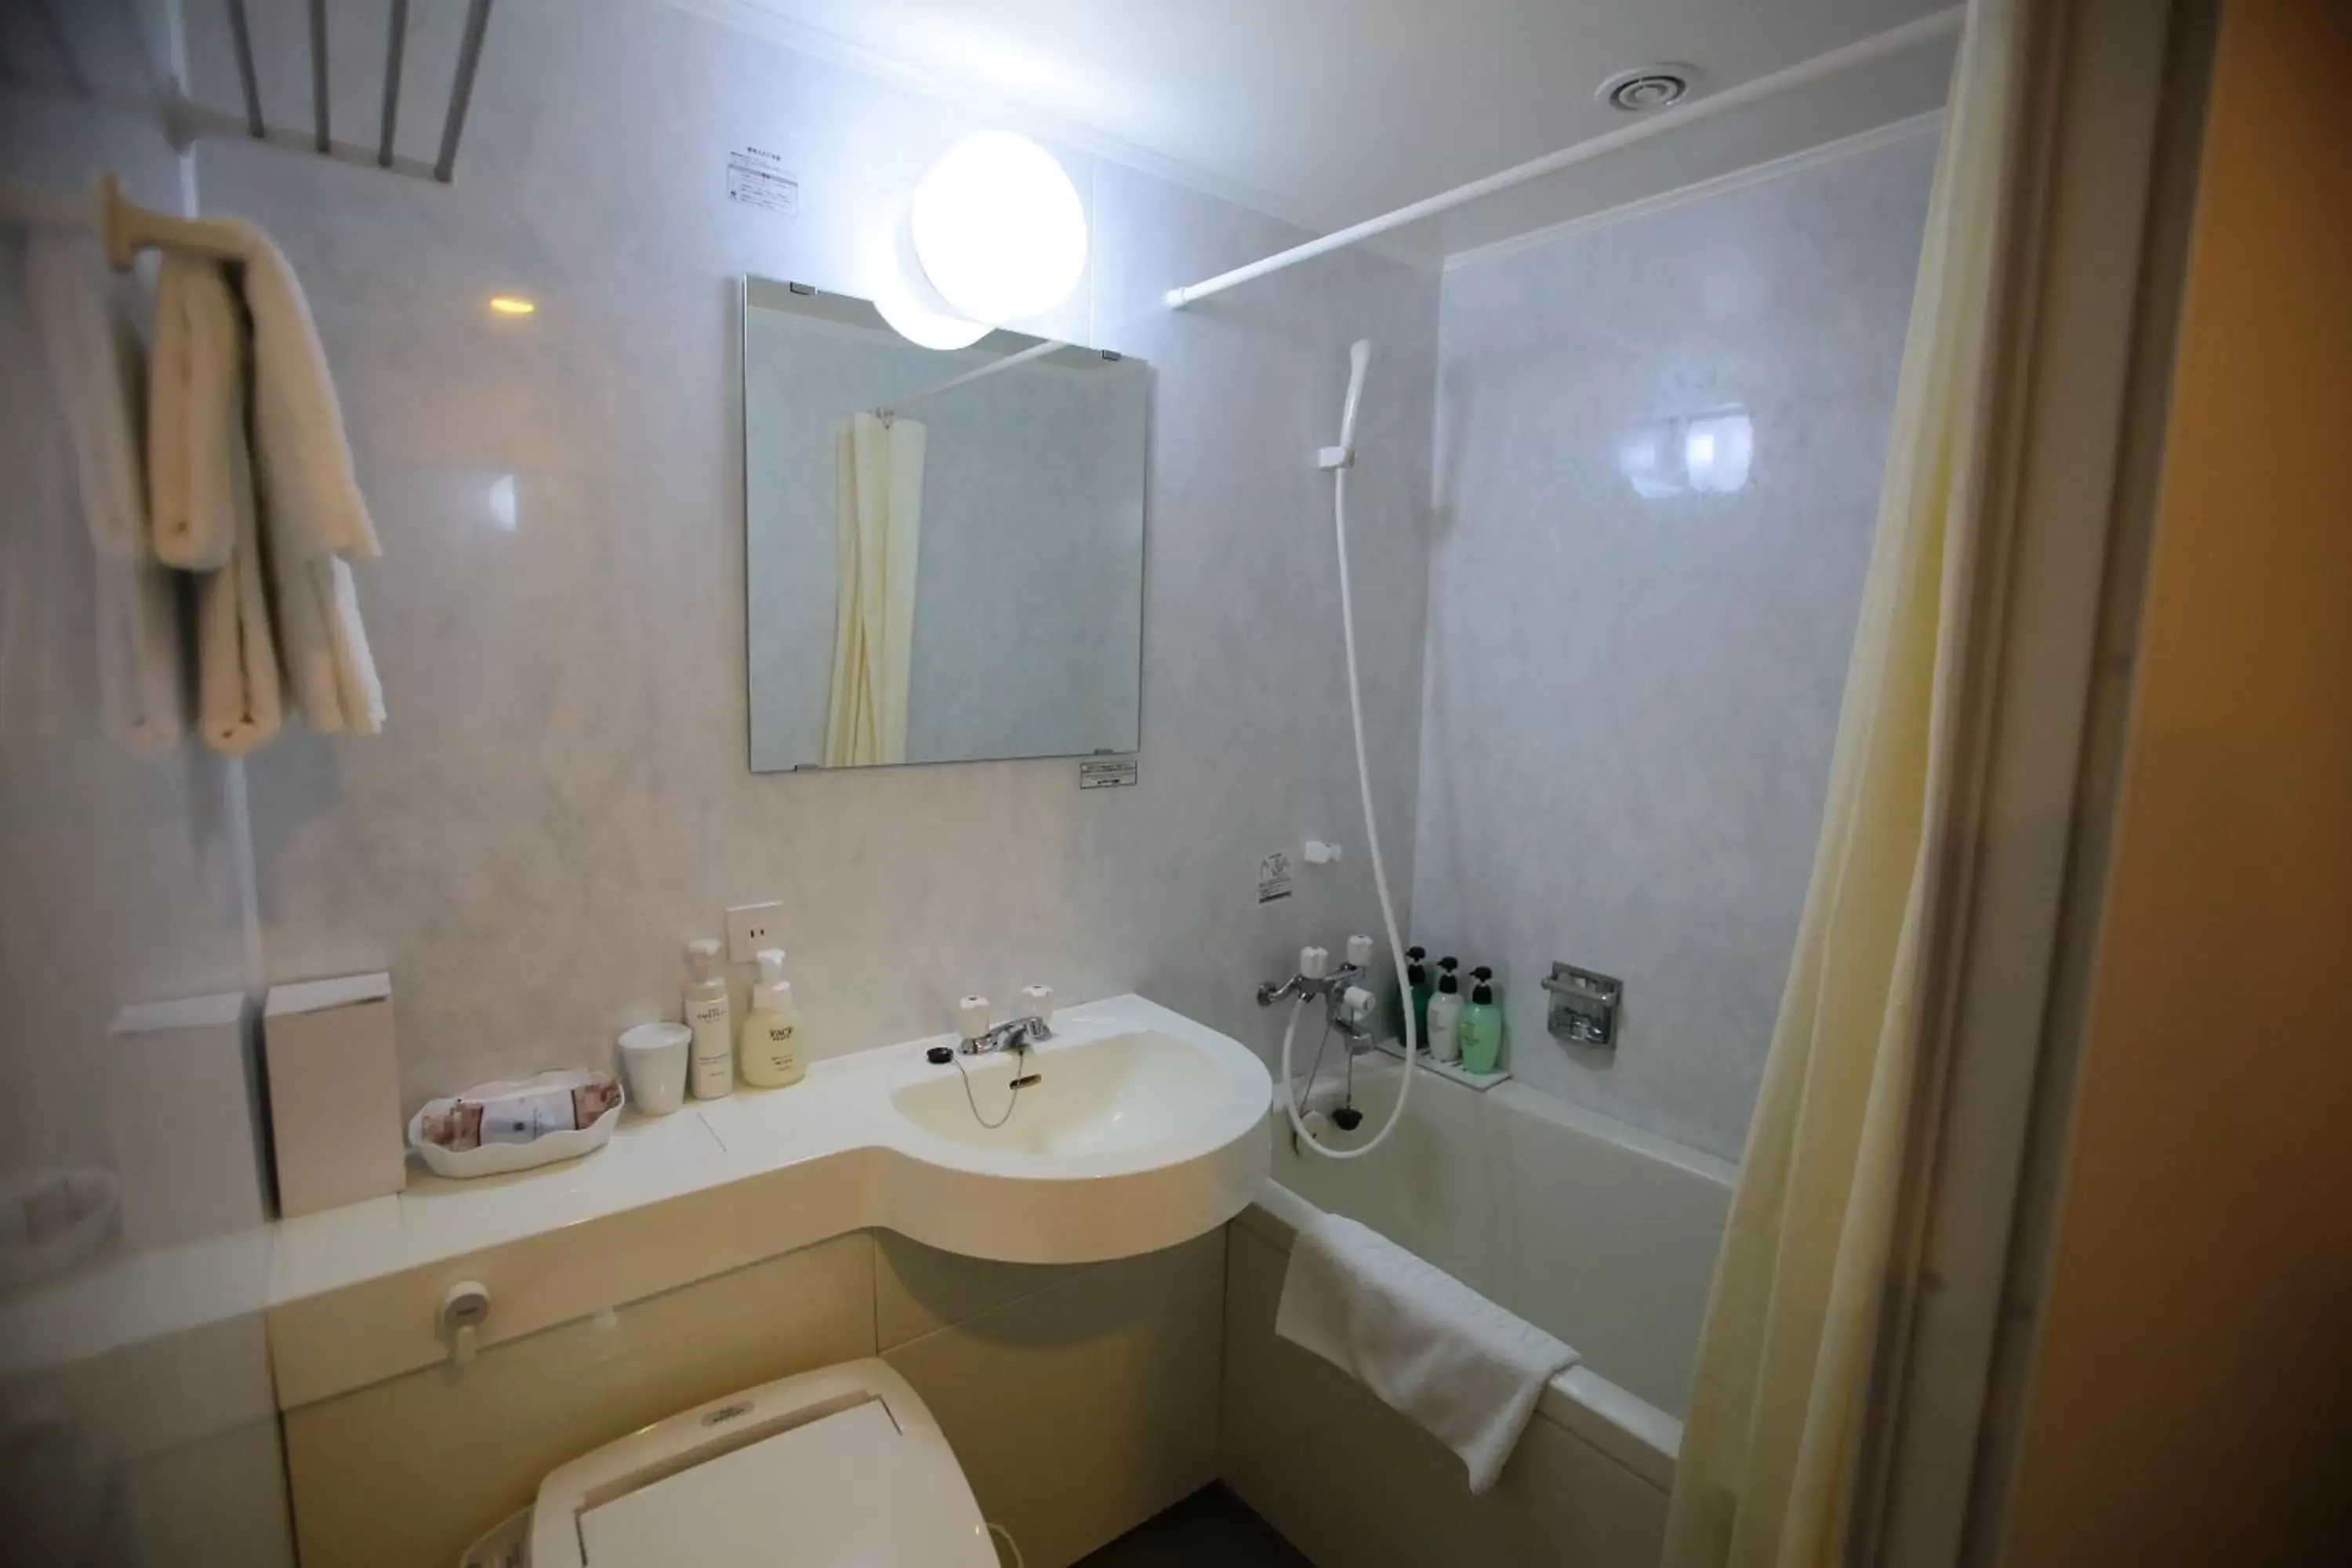 Photo of the whole room, Bathroom in International Hotel Ube